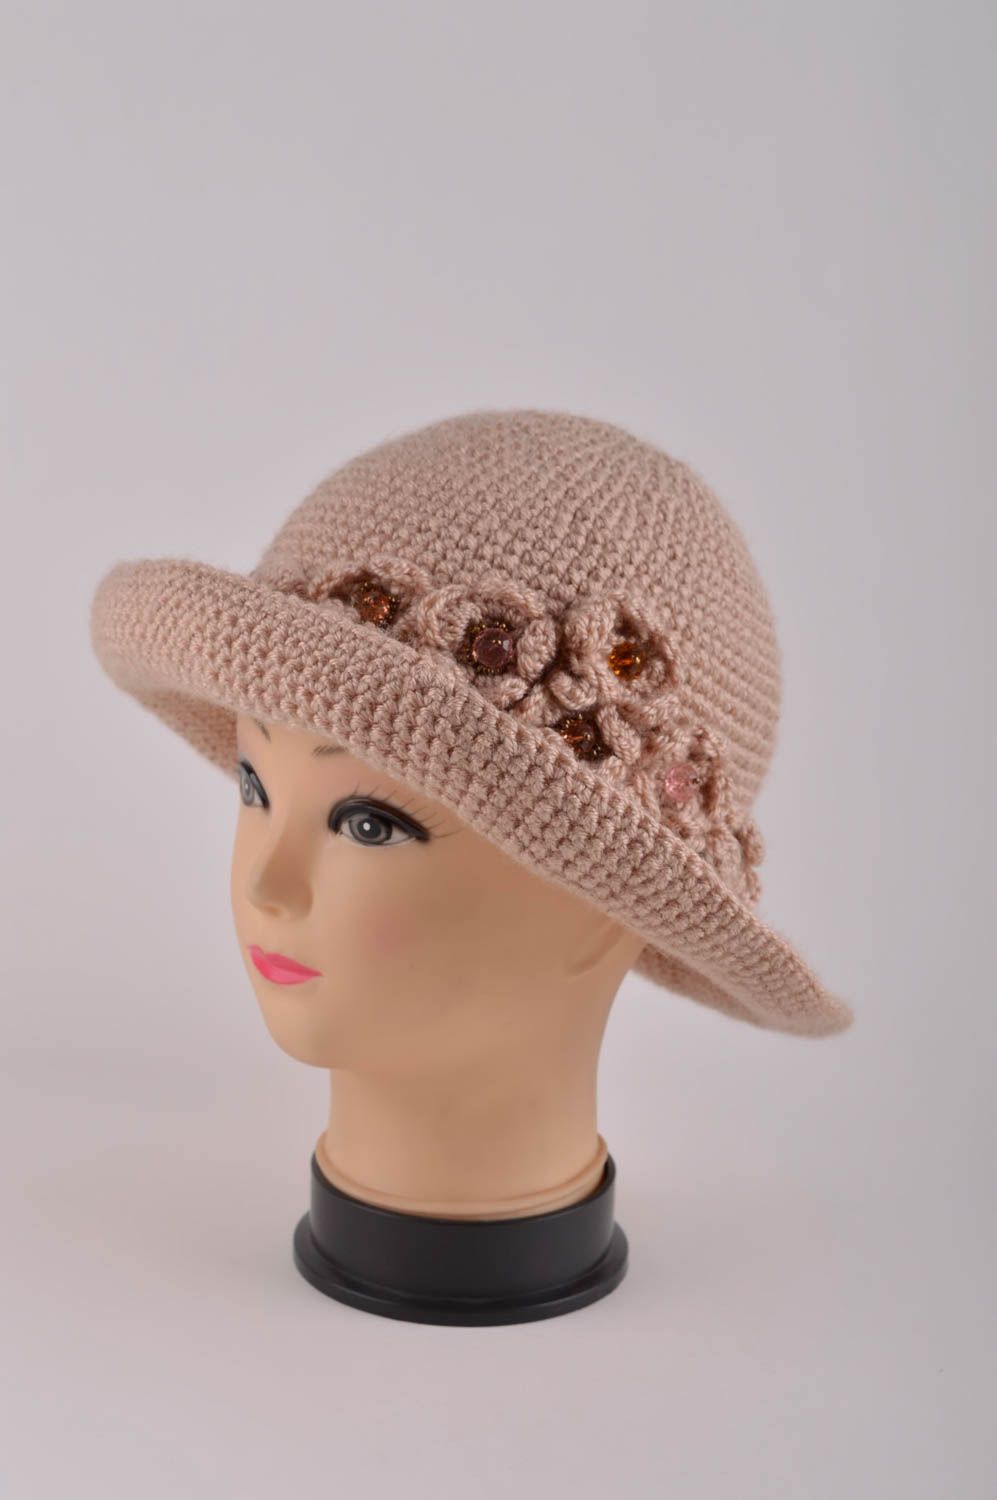 Handmade sun hat ladies sun hat fashion accessories gifts for women summer hat photo 2